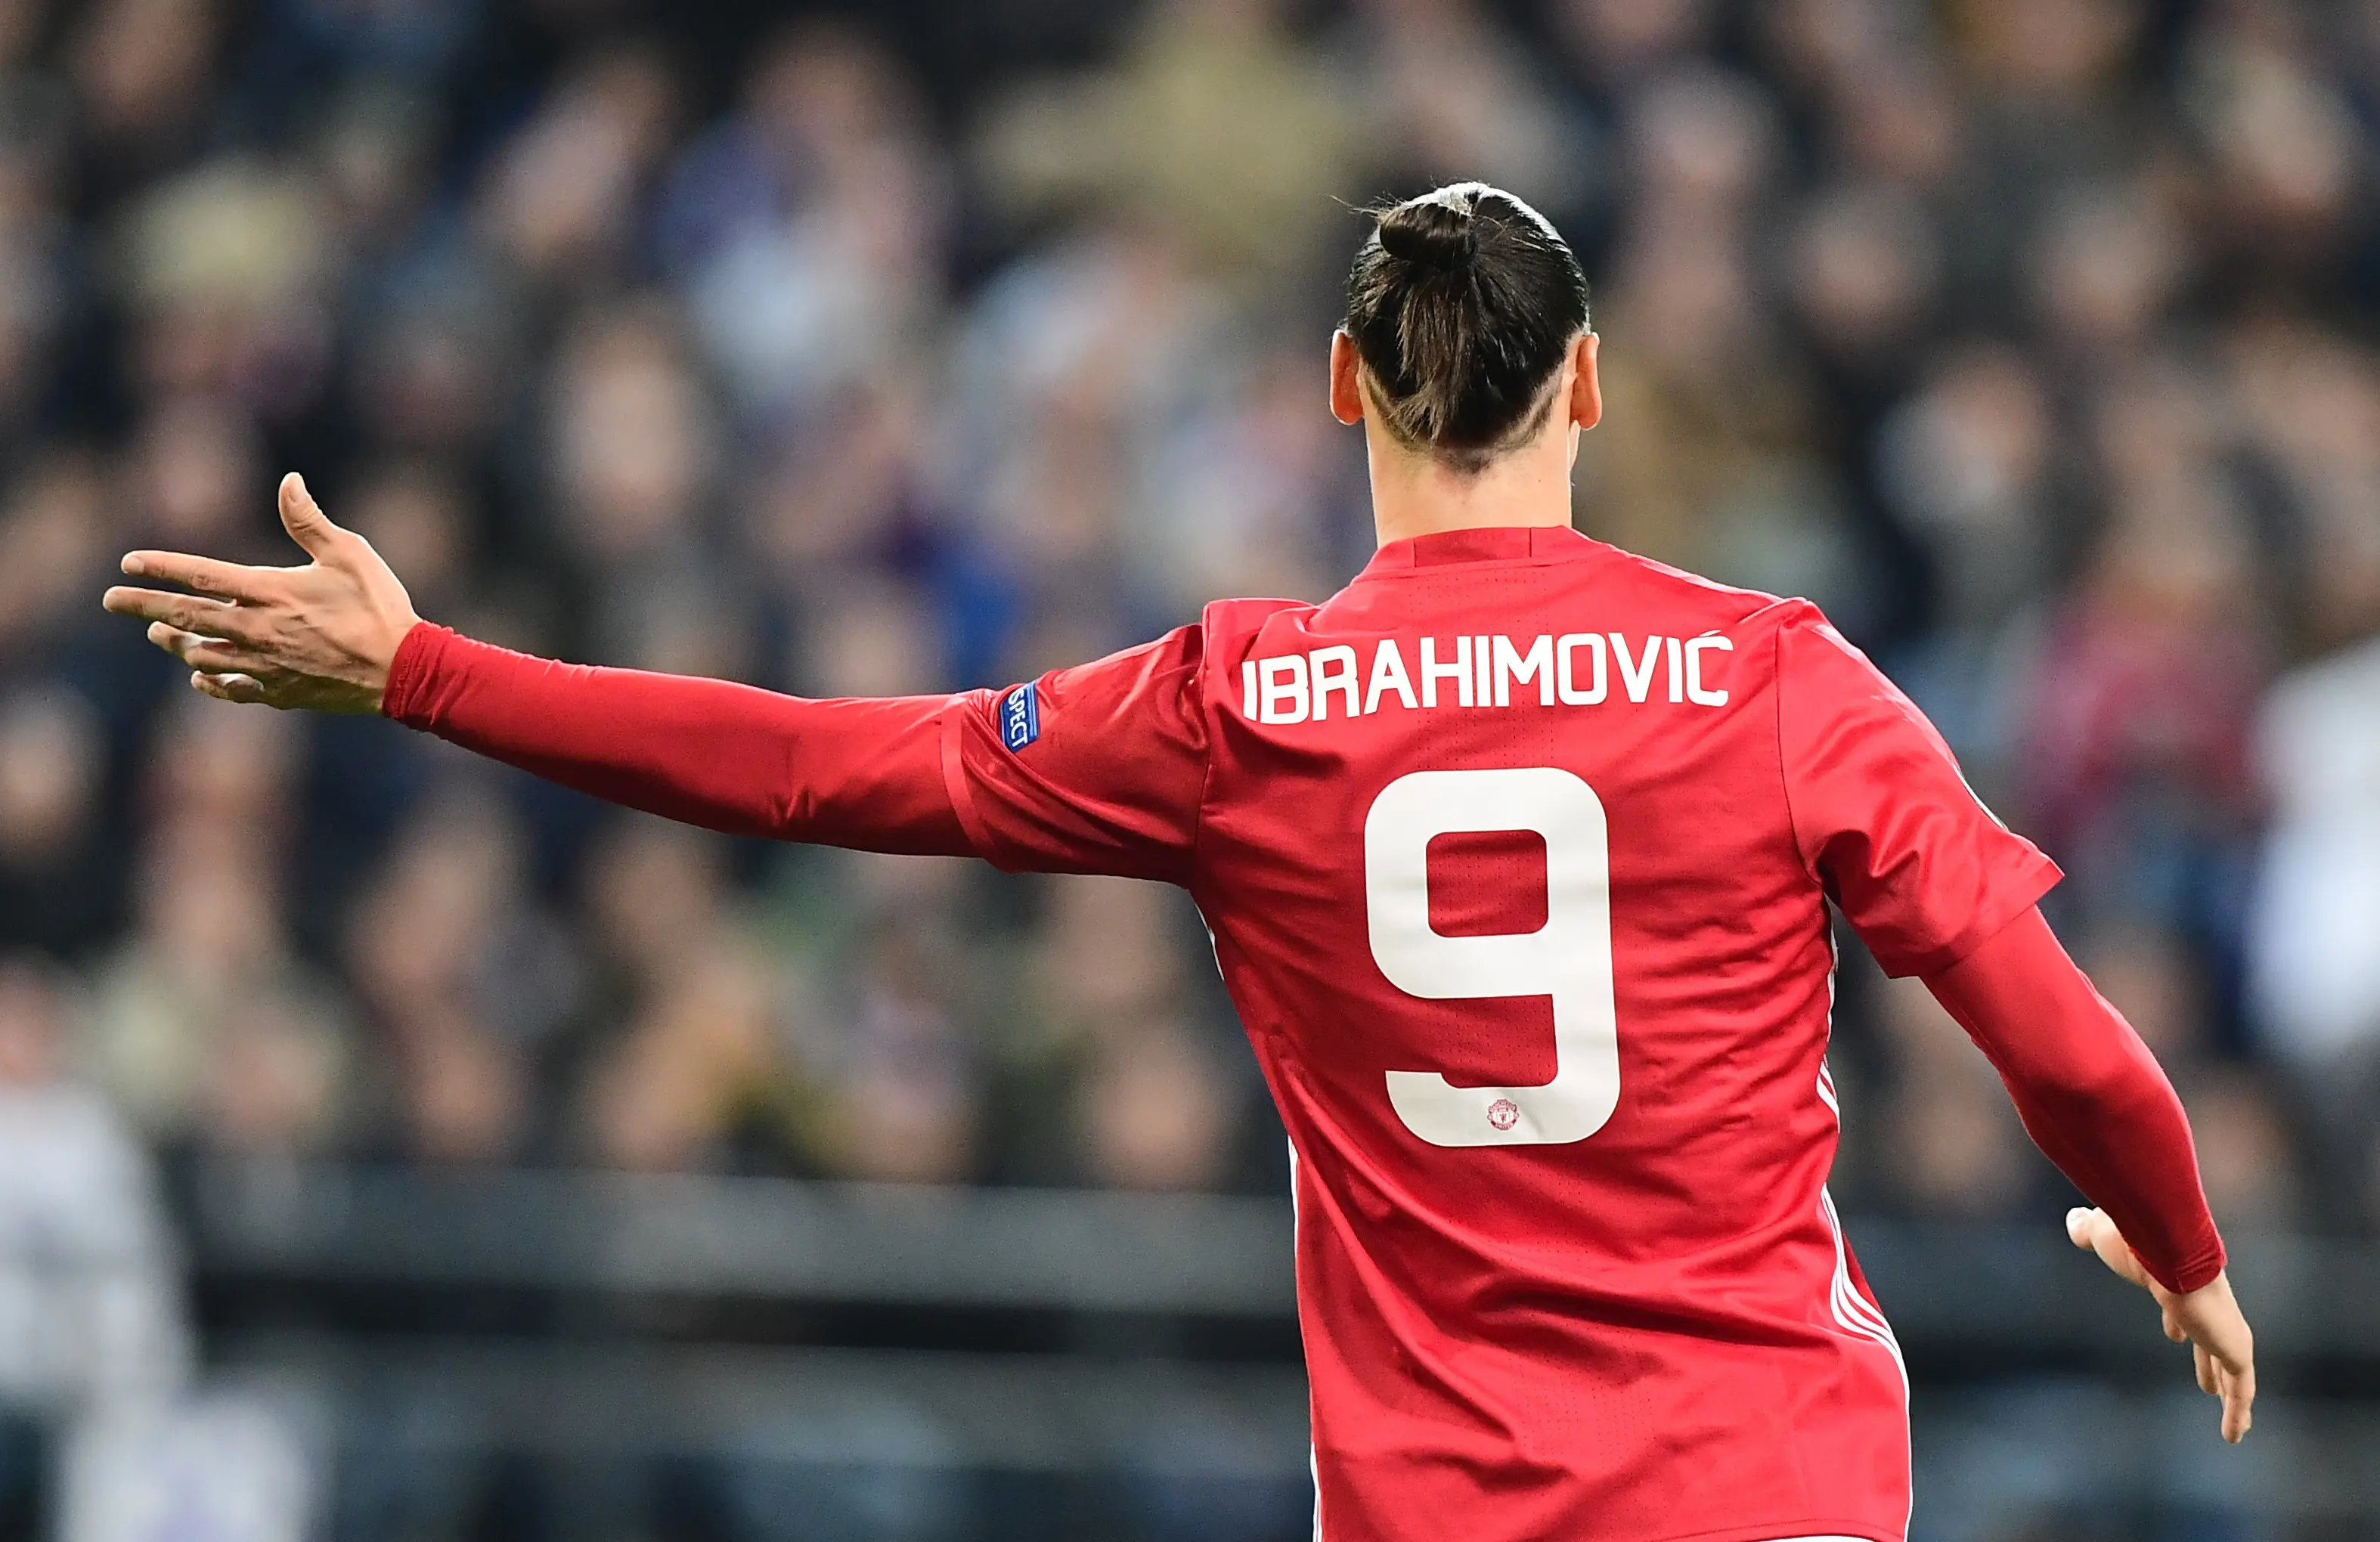 Penyerang Manchester United (MU), Zlatan Ibrahimovic. (EMMANUEL DUNAND / AFP)